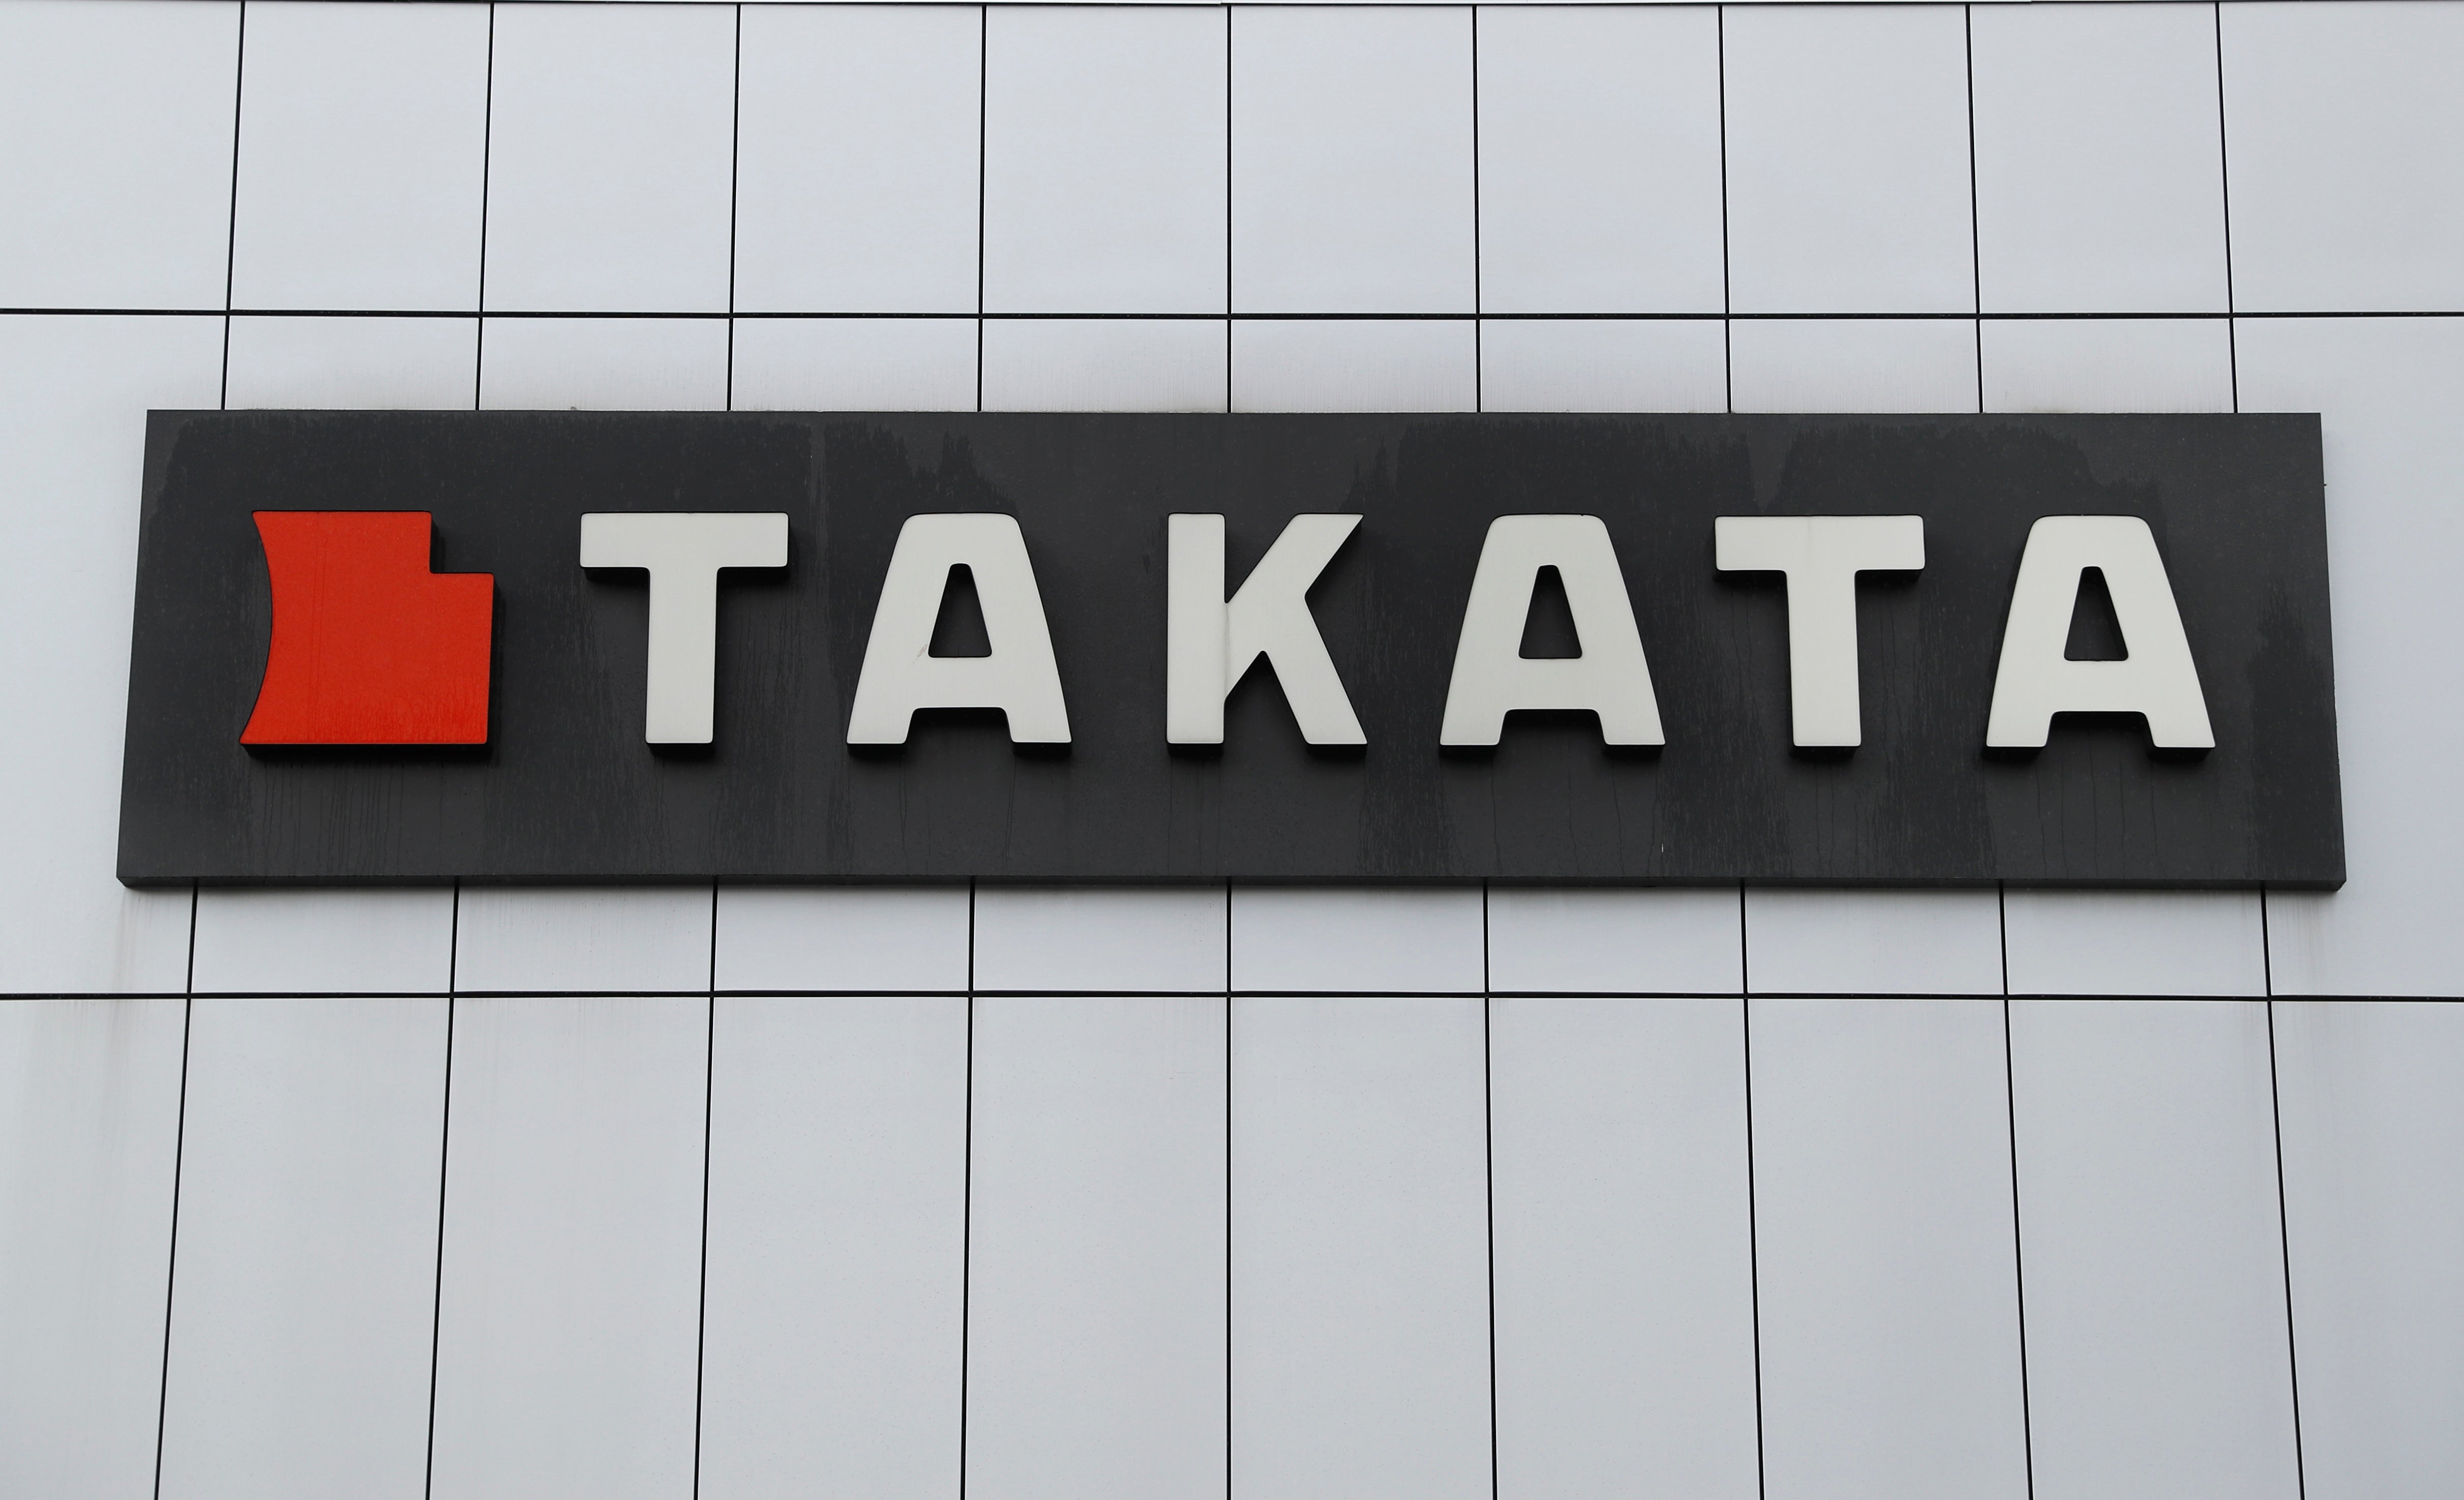 Takata-Airbags-New Investigation